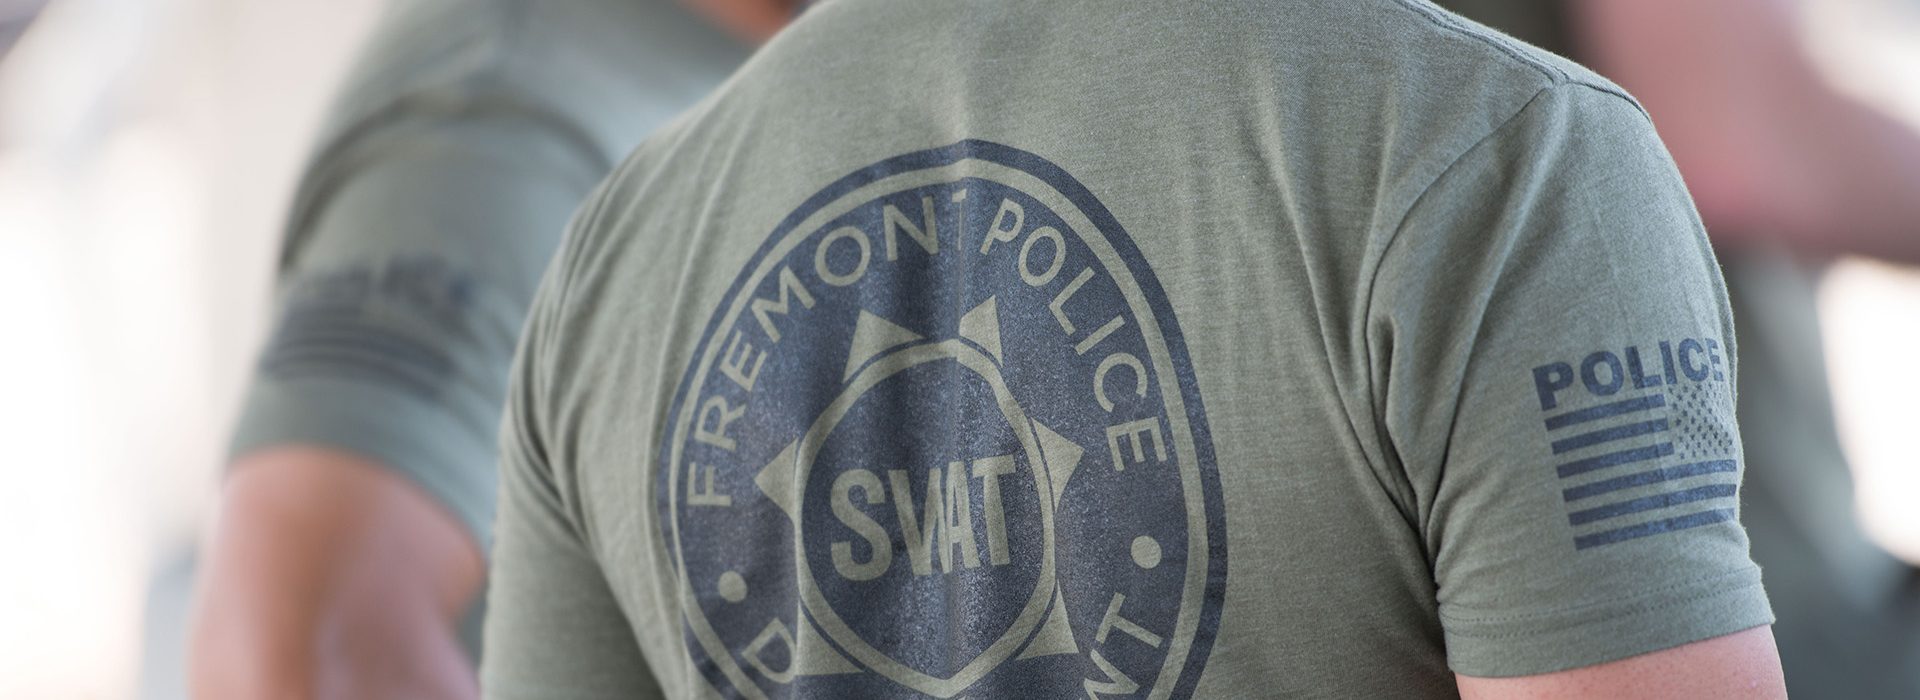 Fremont Police Department SWAT team jobs